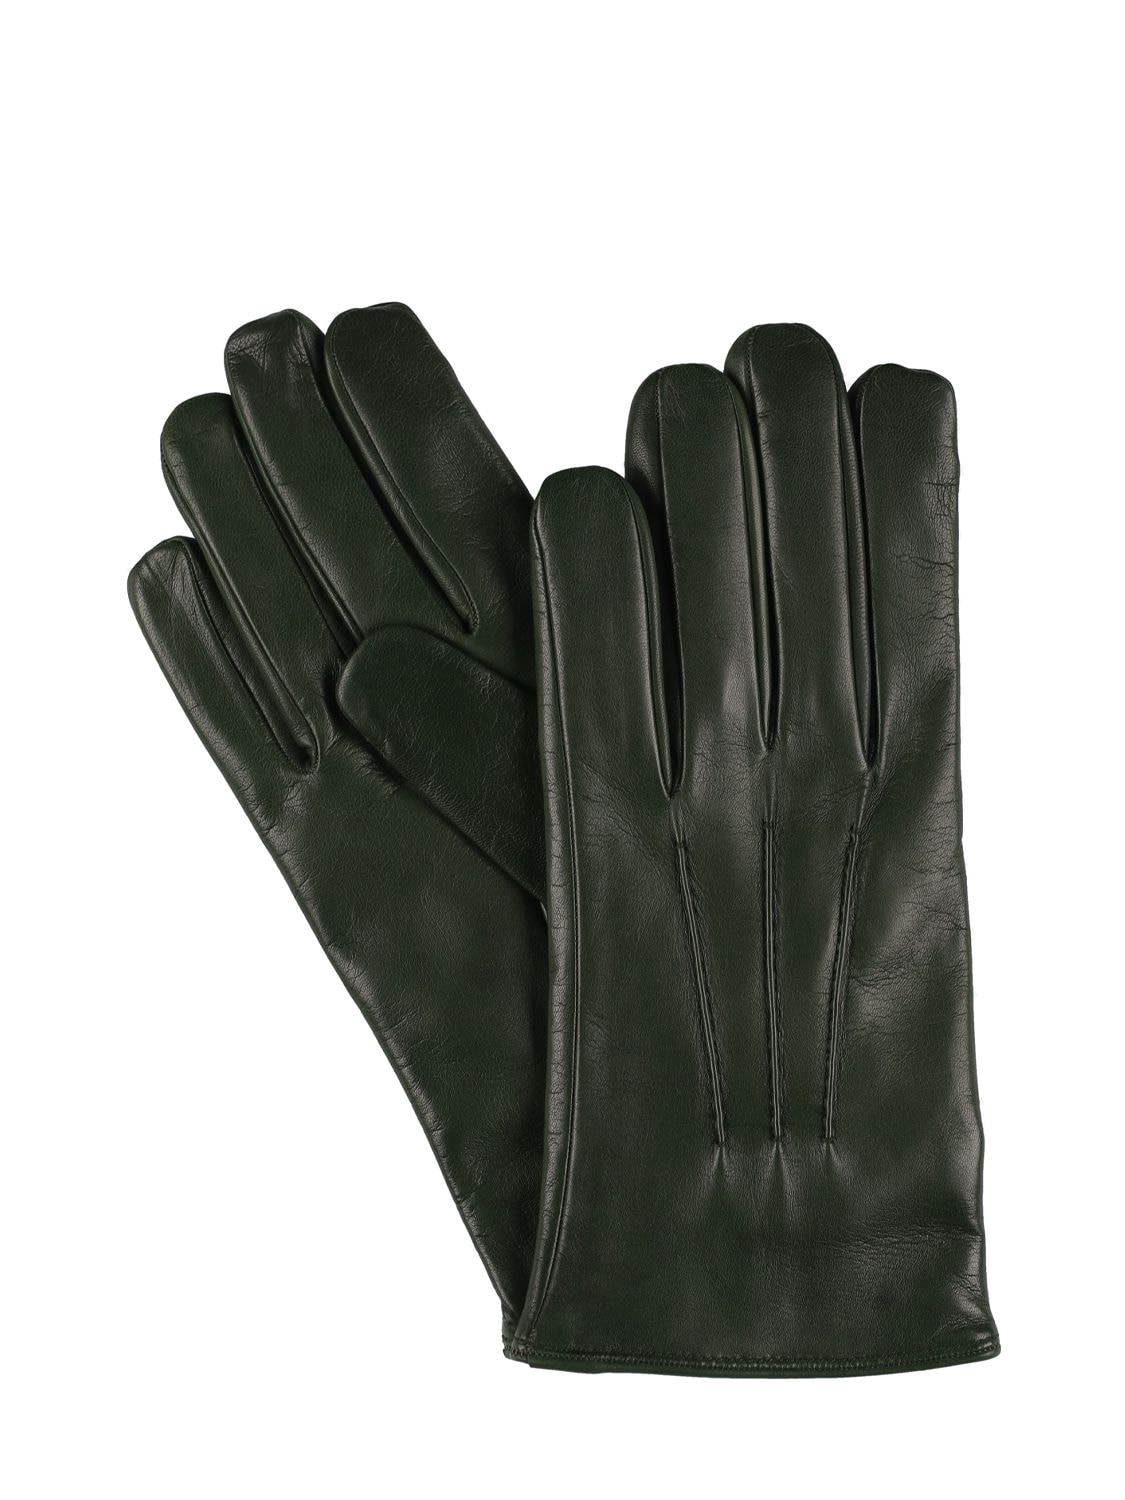 Mario Portolano Leather Gloves In Dark Green